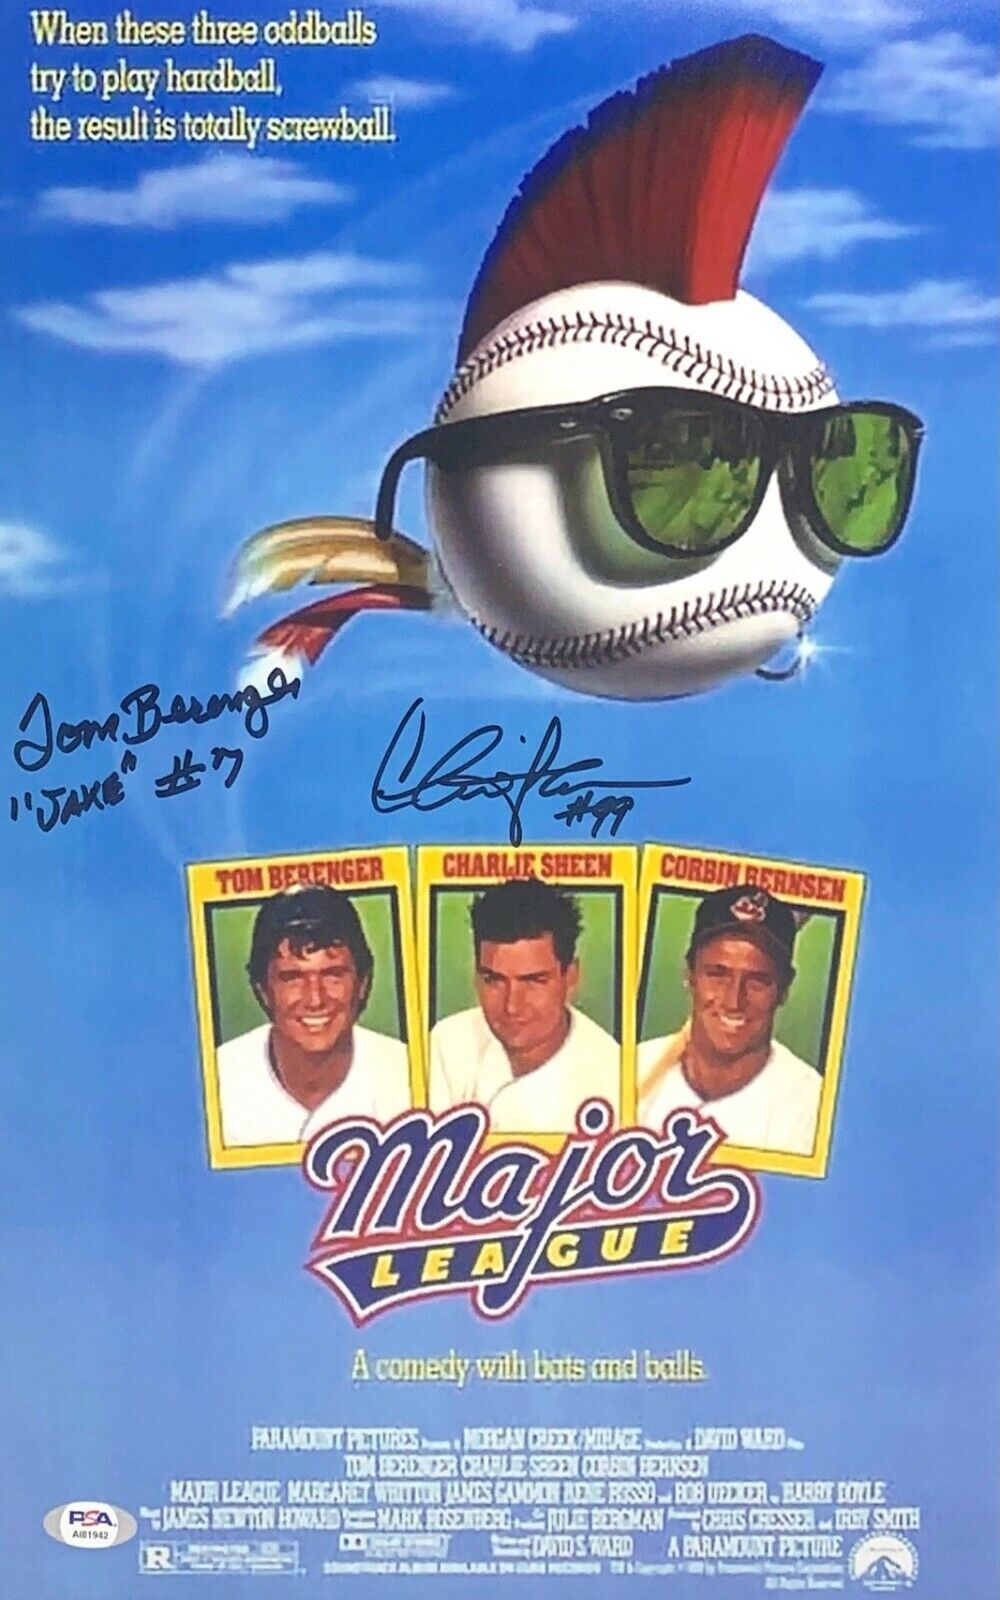 Charlie Sheen & Tom Berenger Signed Major League 11x17 Photo Poster painting PSA AI81942